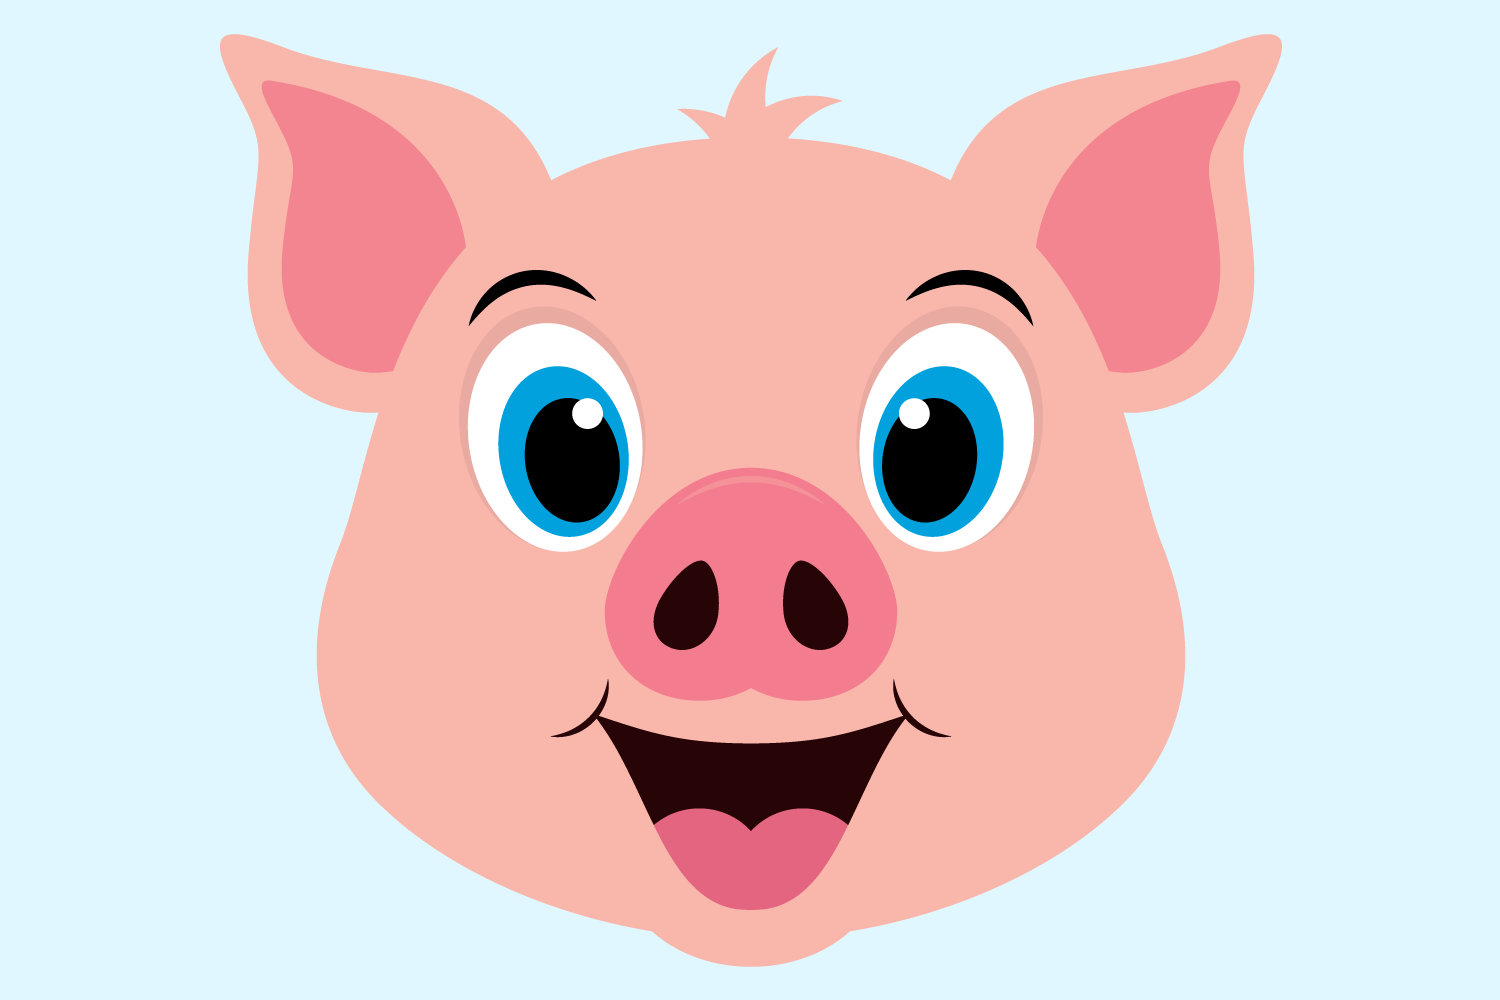 Download Cute Pig SVG Cut Files, Happy Farm Animal Face, Piglet Head